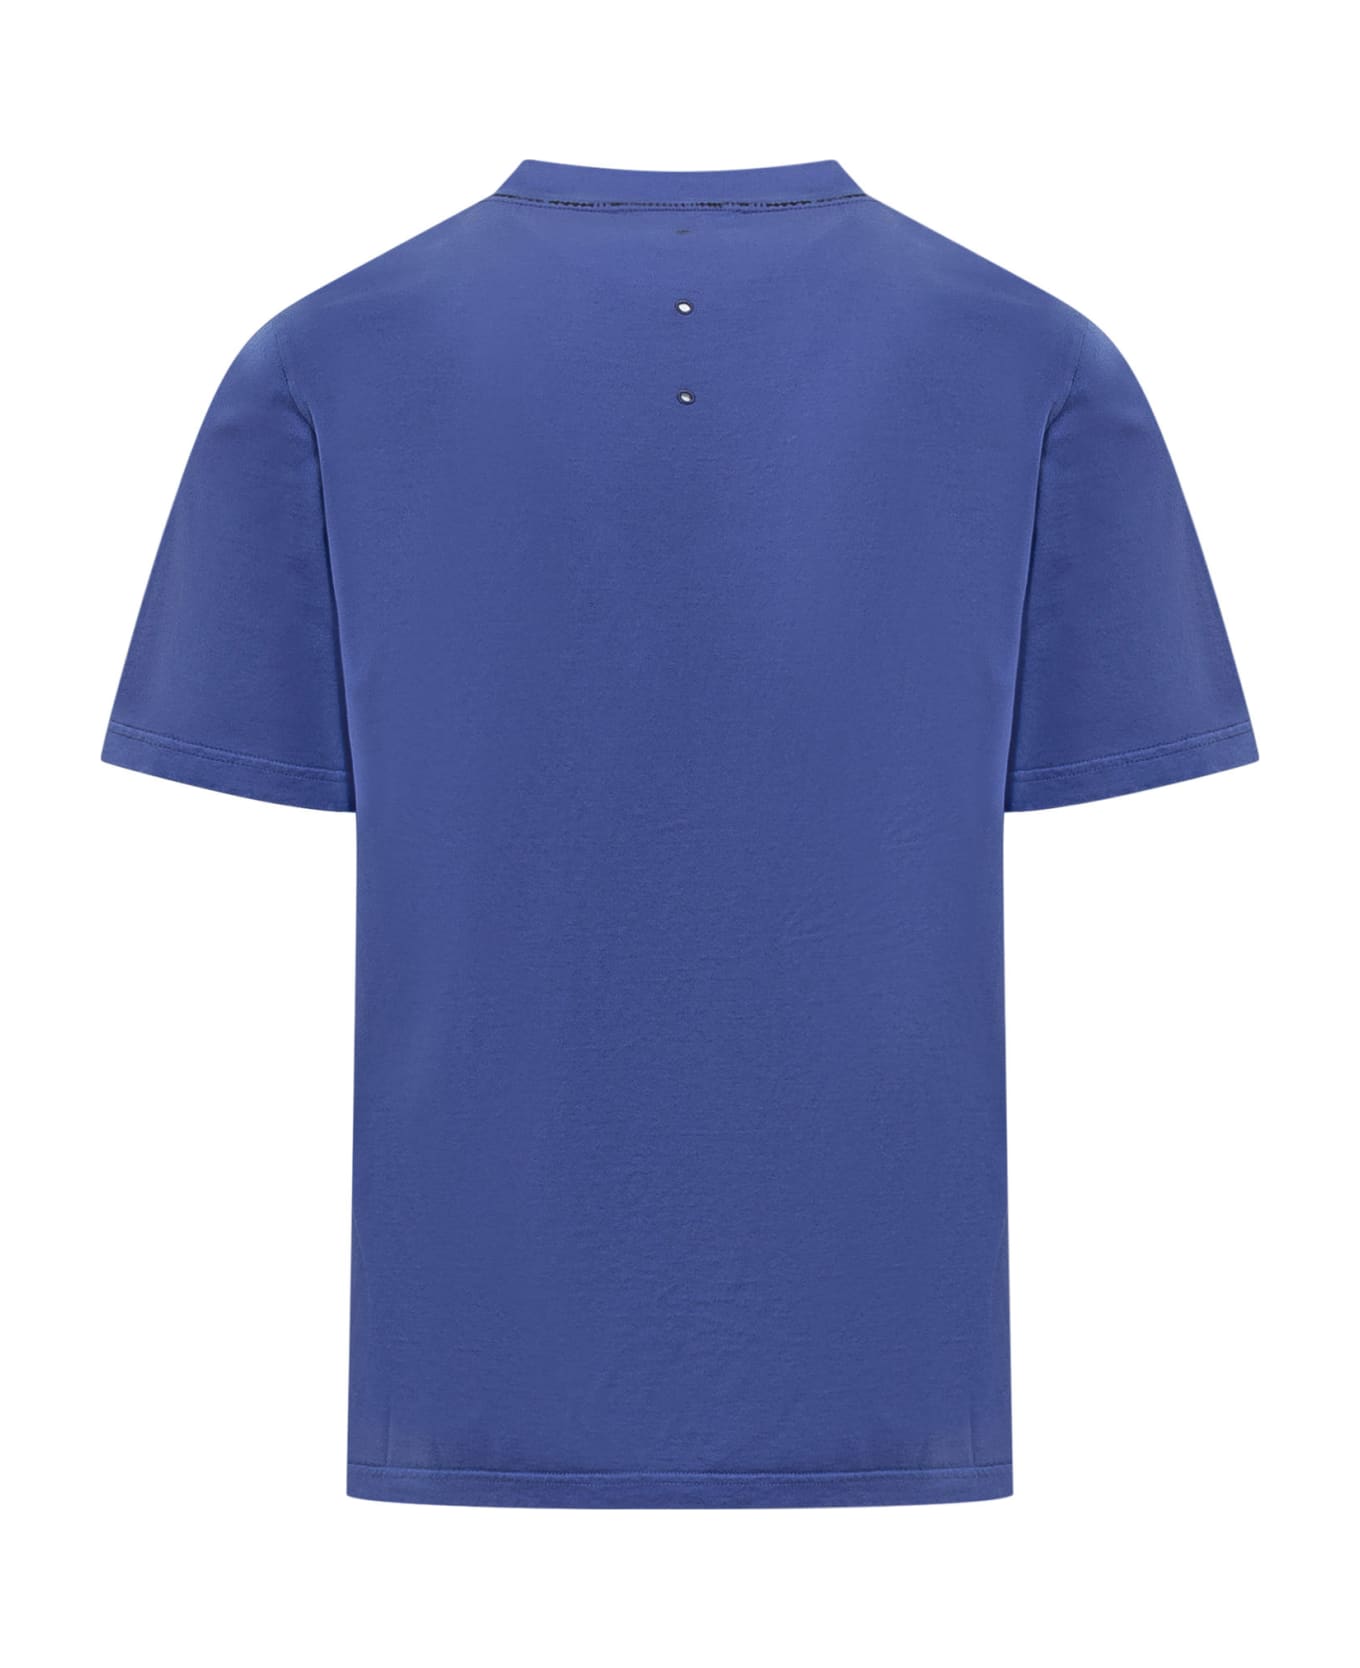 Premiata T-shirt With Print - BLUE